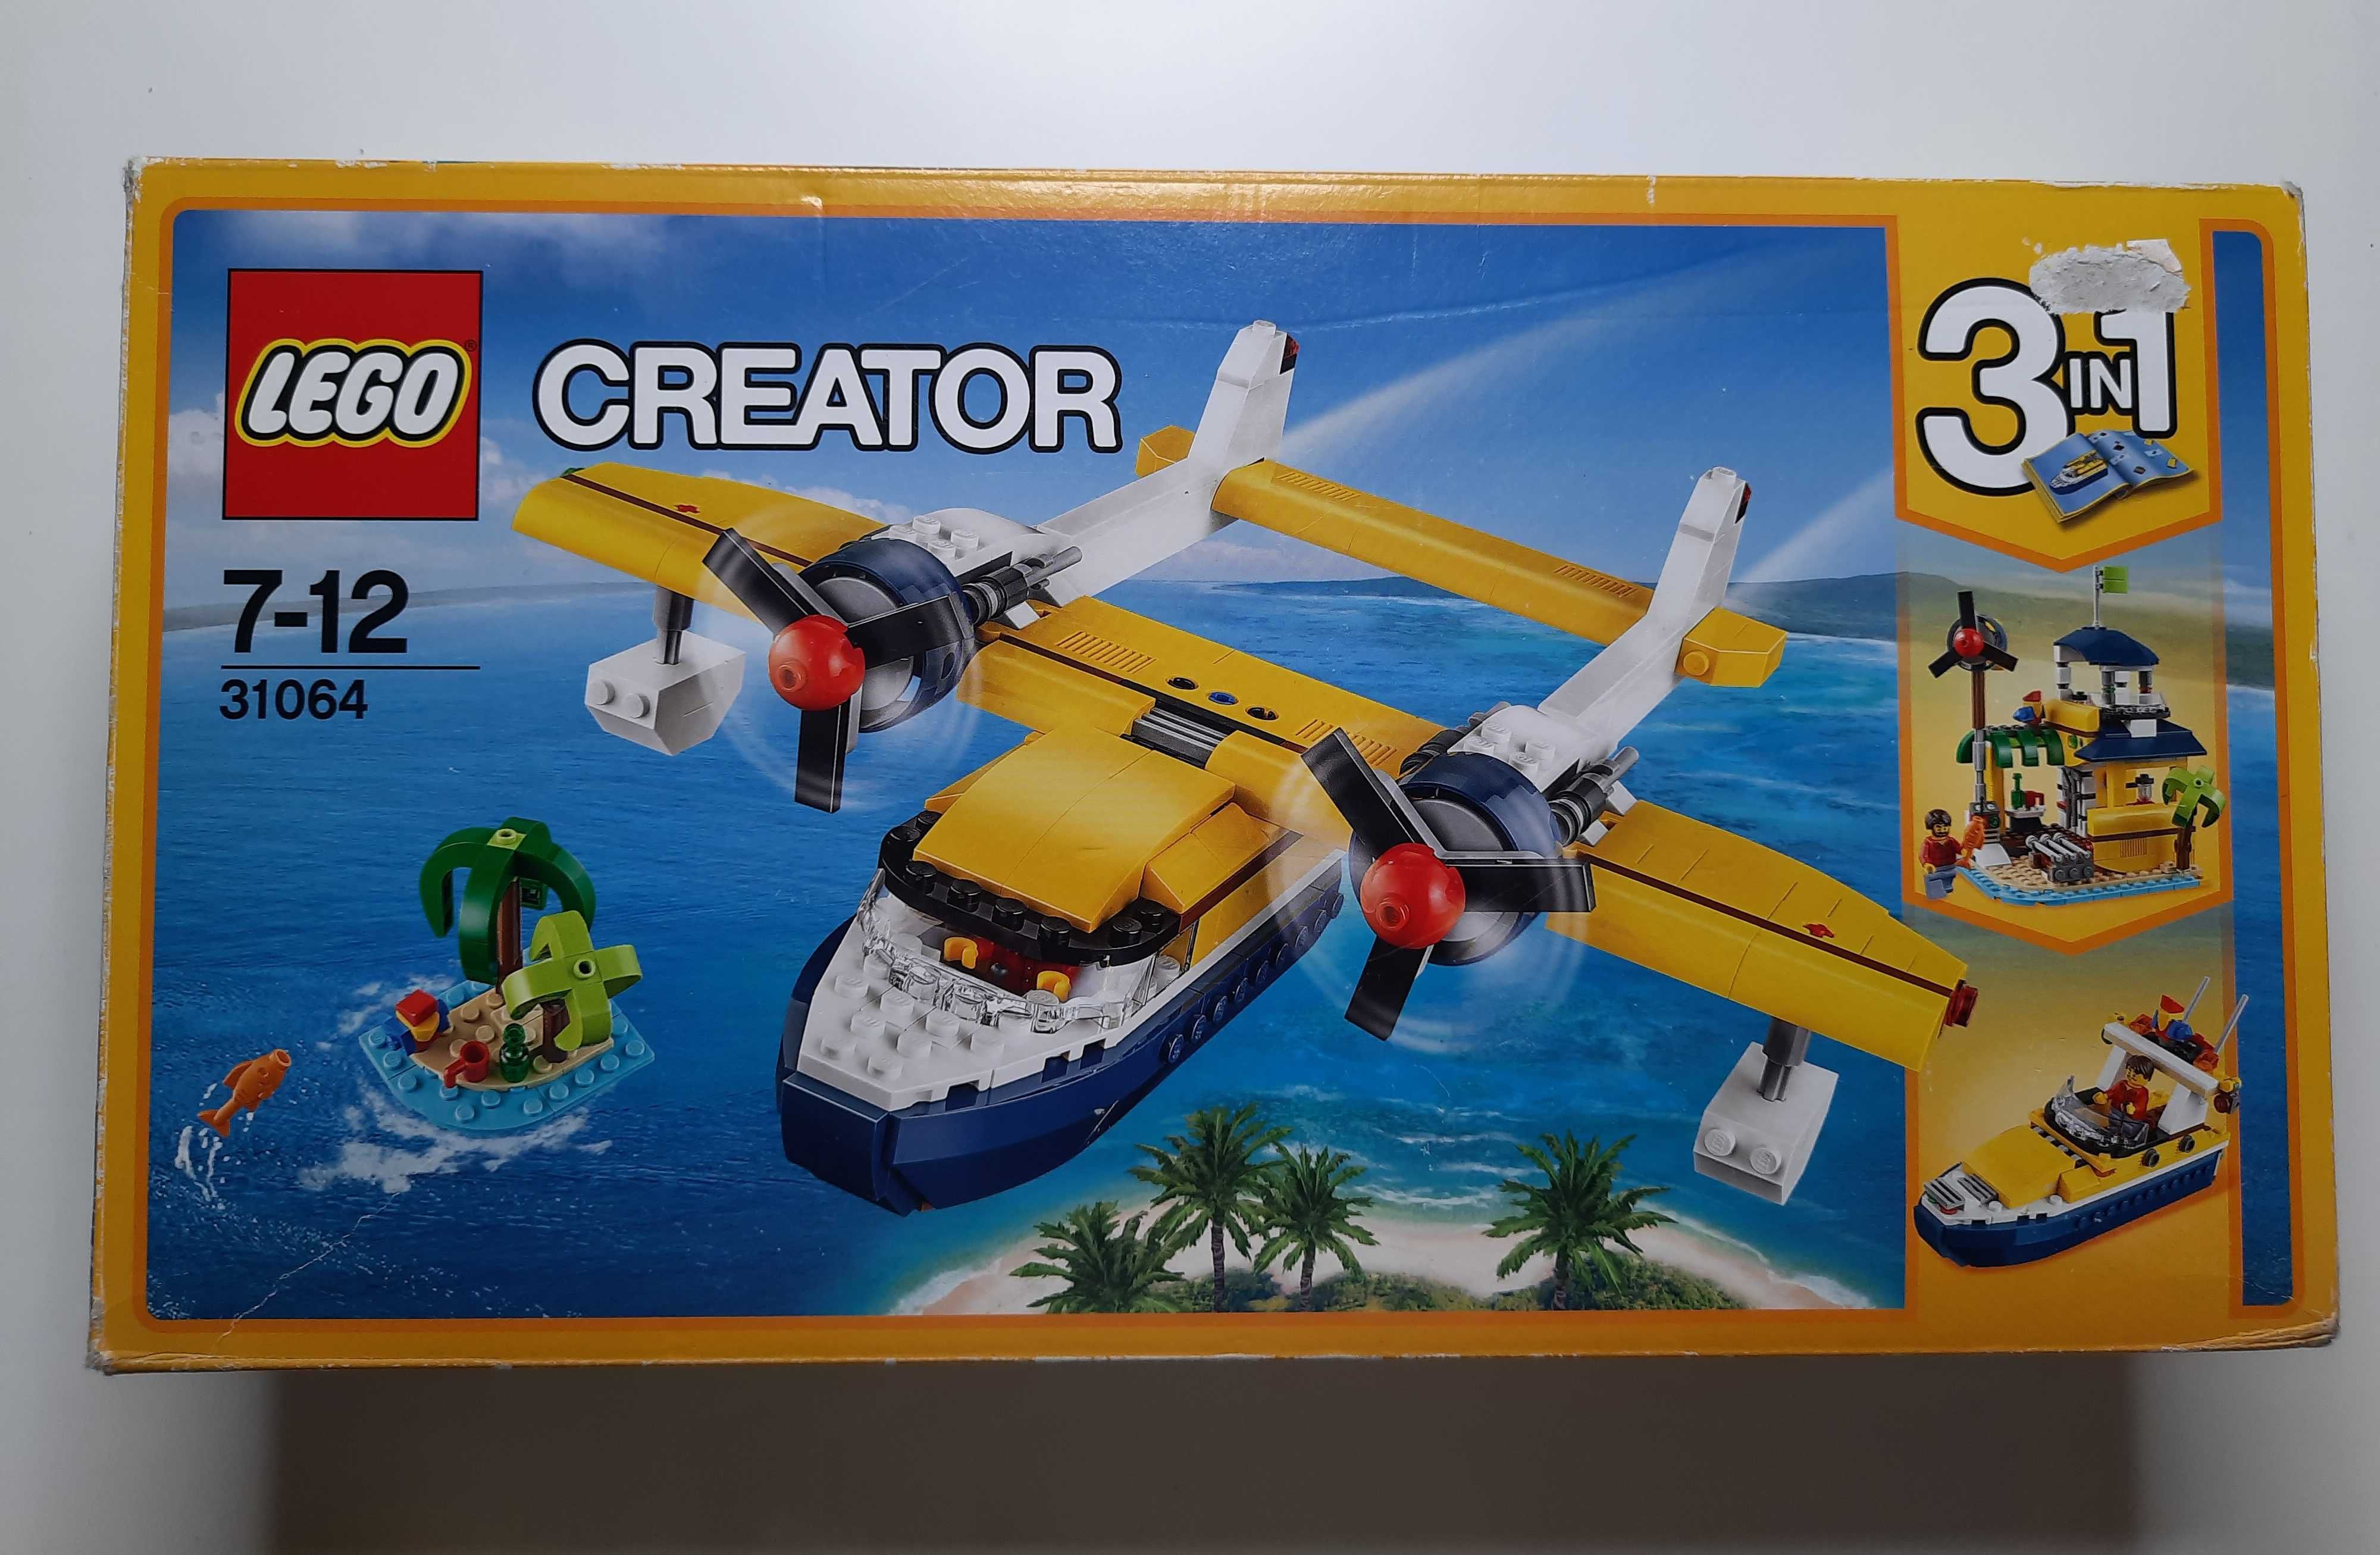 Lego creator 31064